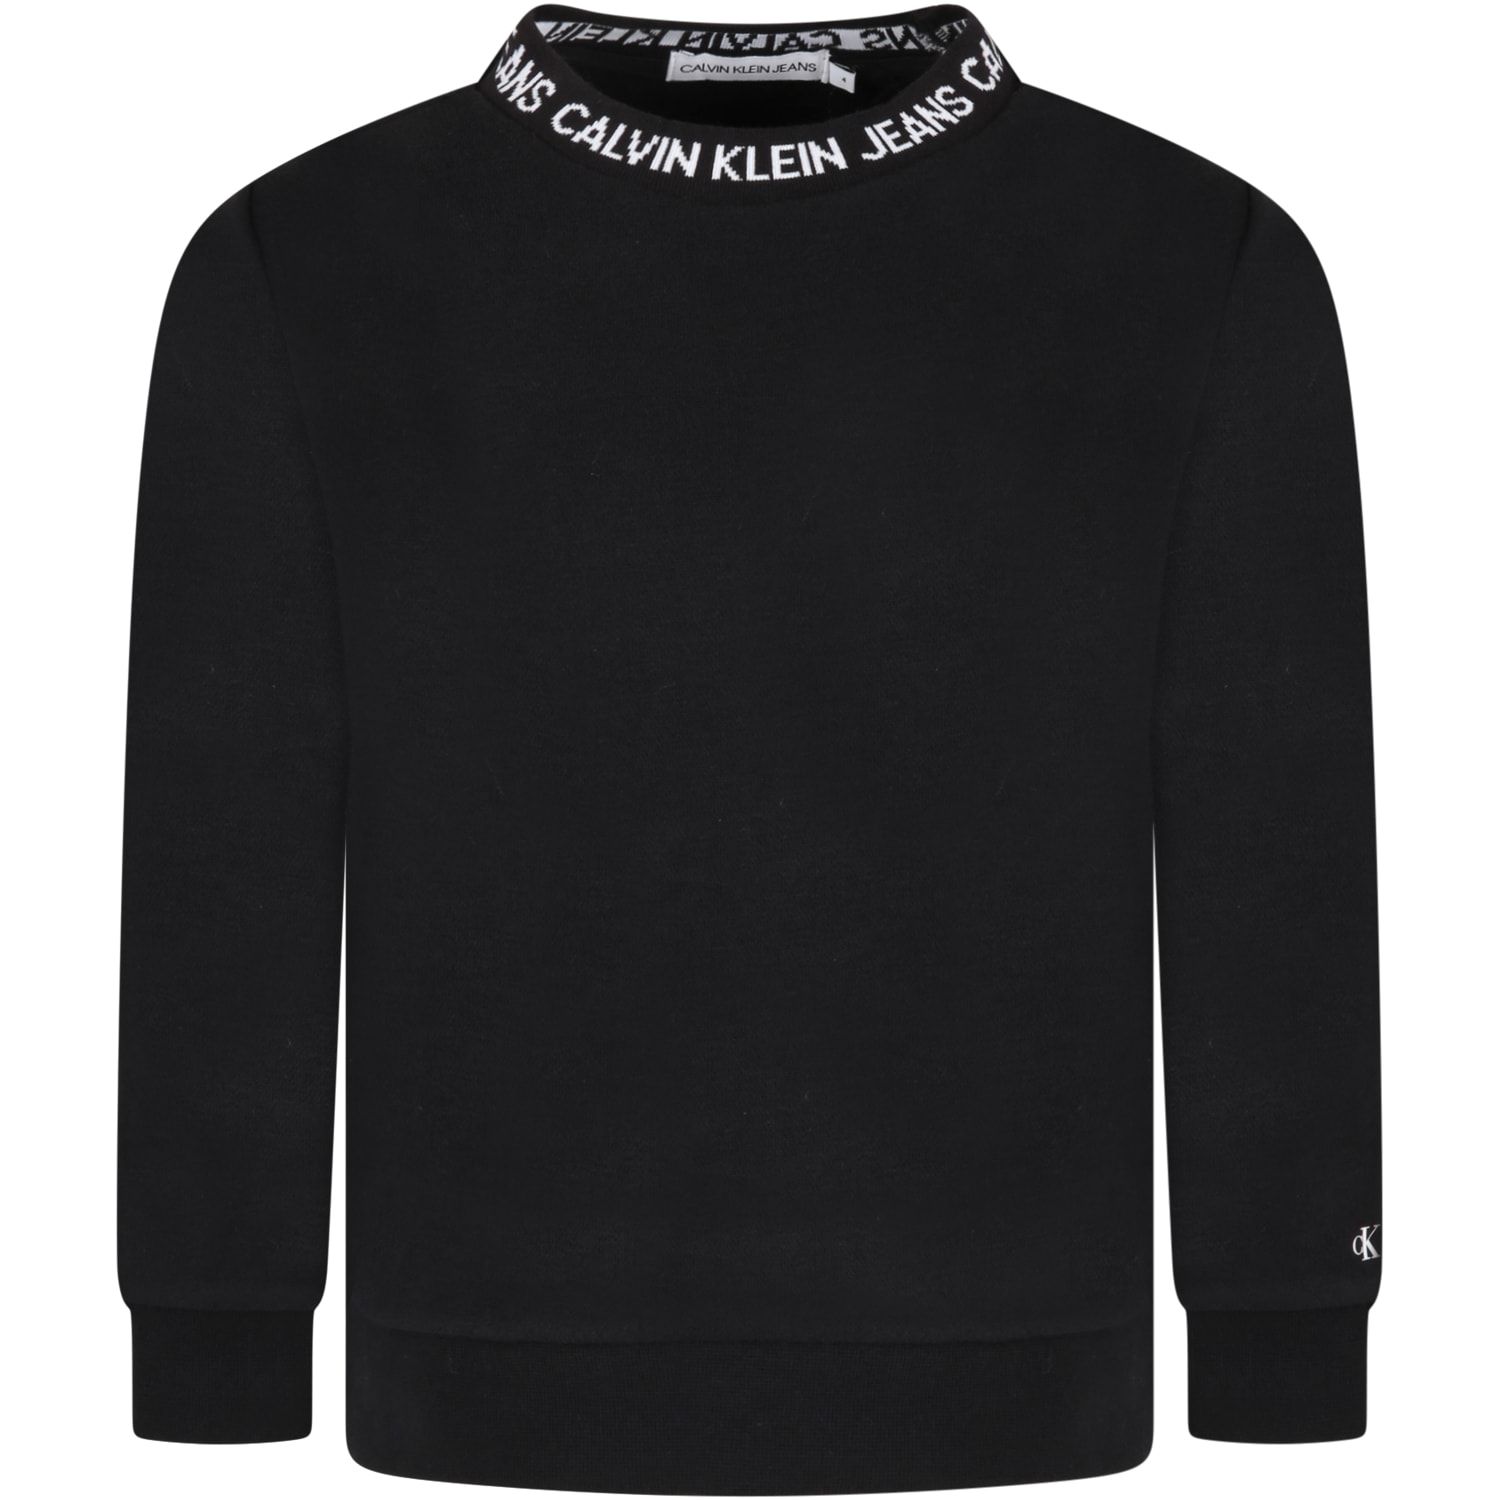 Calvin Klein Black Sweatshirt For Kids With White Logo